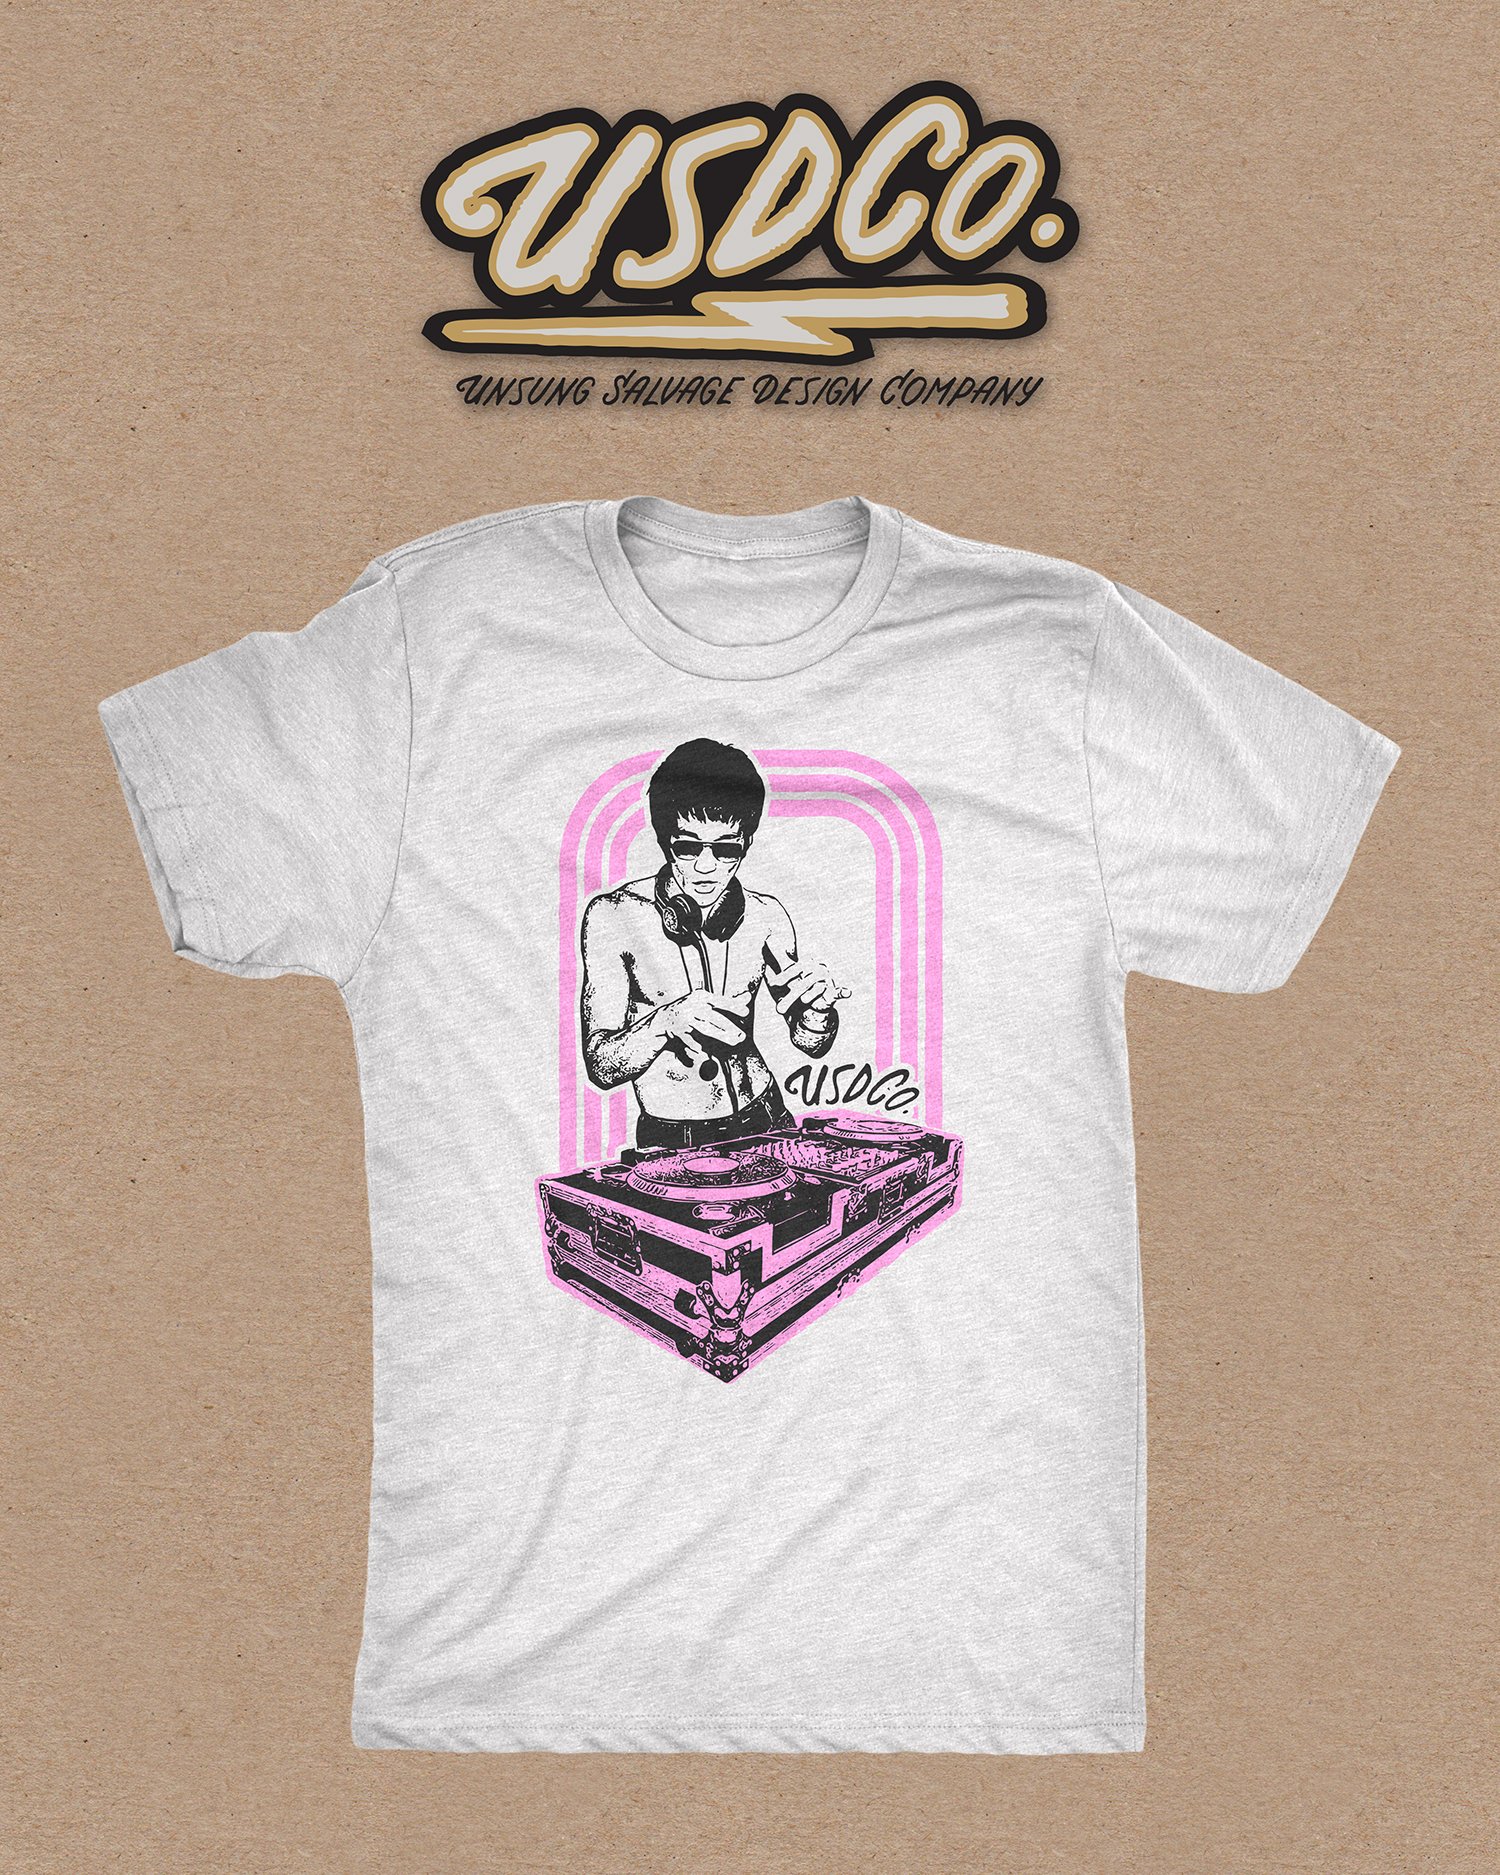 DJ Unsung Salvage Design Co. - t-shirts, custom screen printing, custom pieces, woodworking